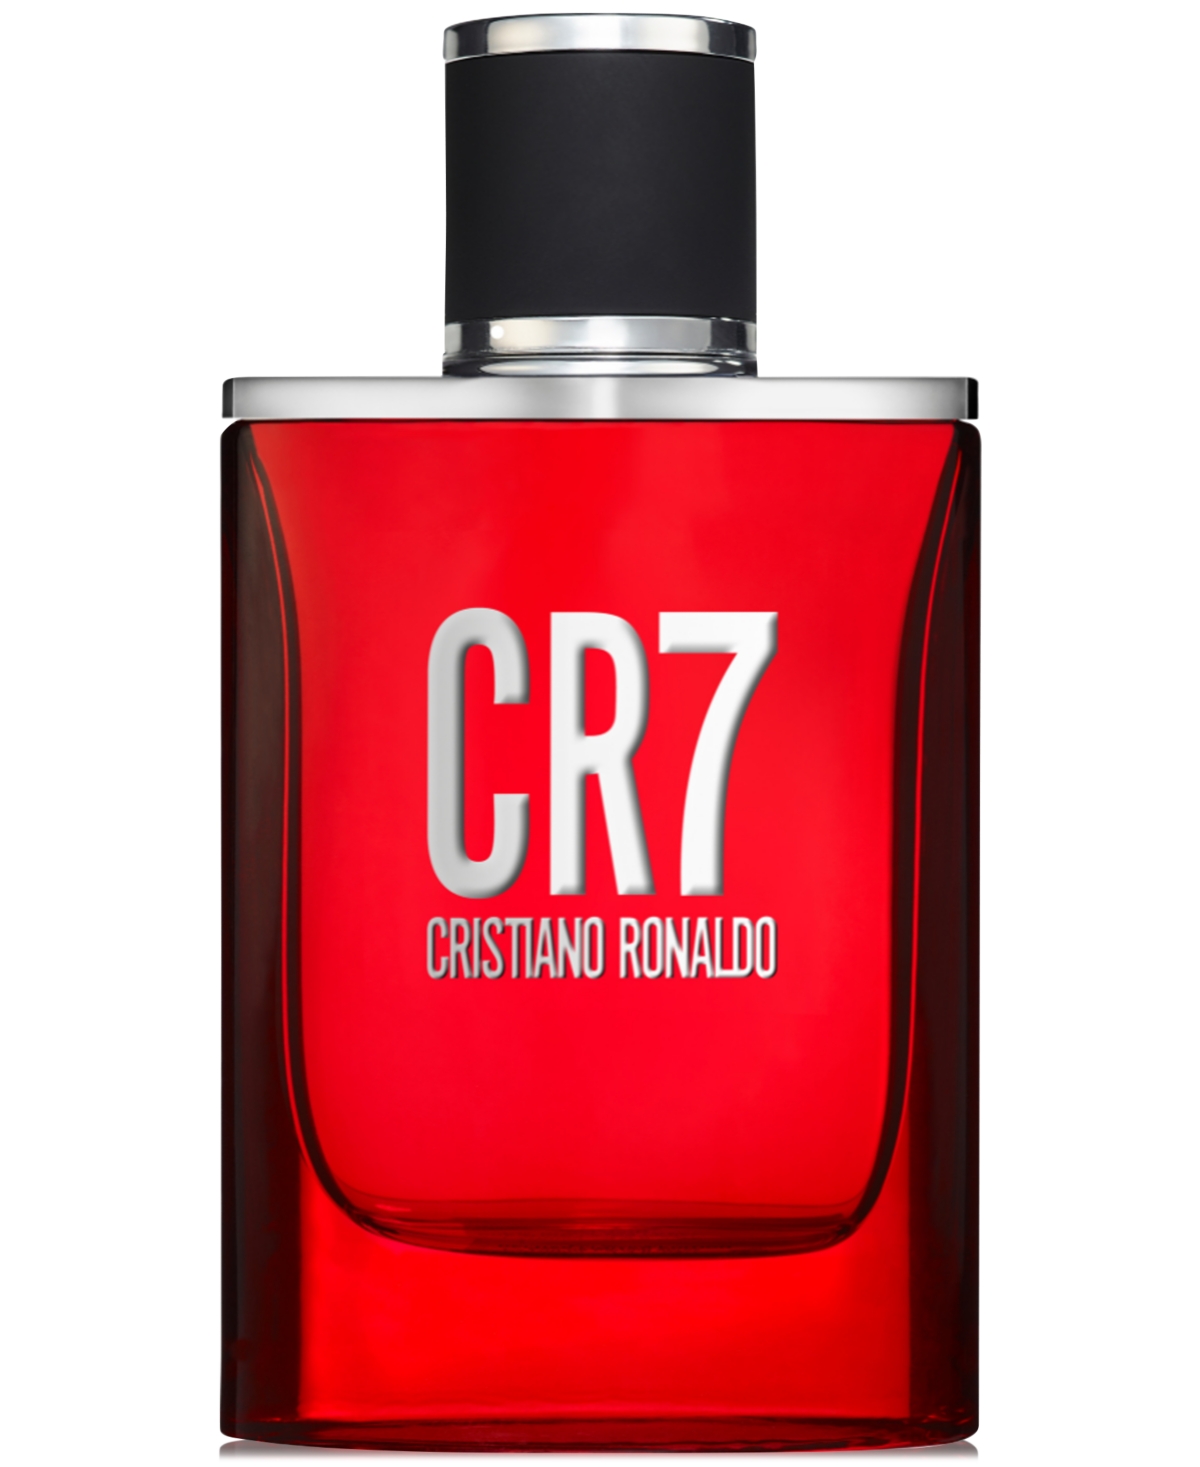 Cr7 Cristiano Ronaldo Men's Eau De Toilette Spray, 1.7 Oz.